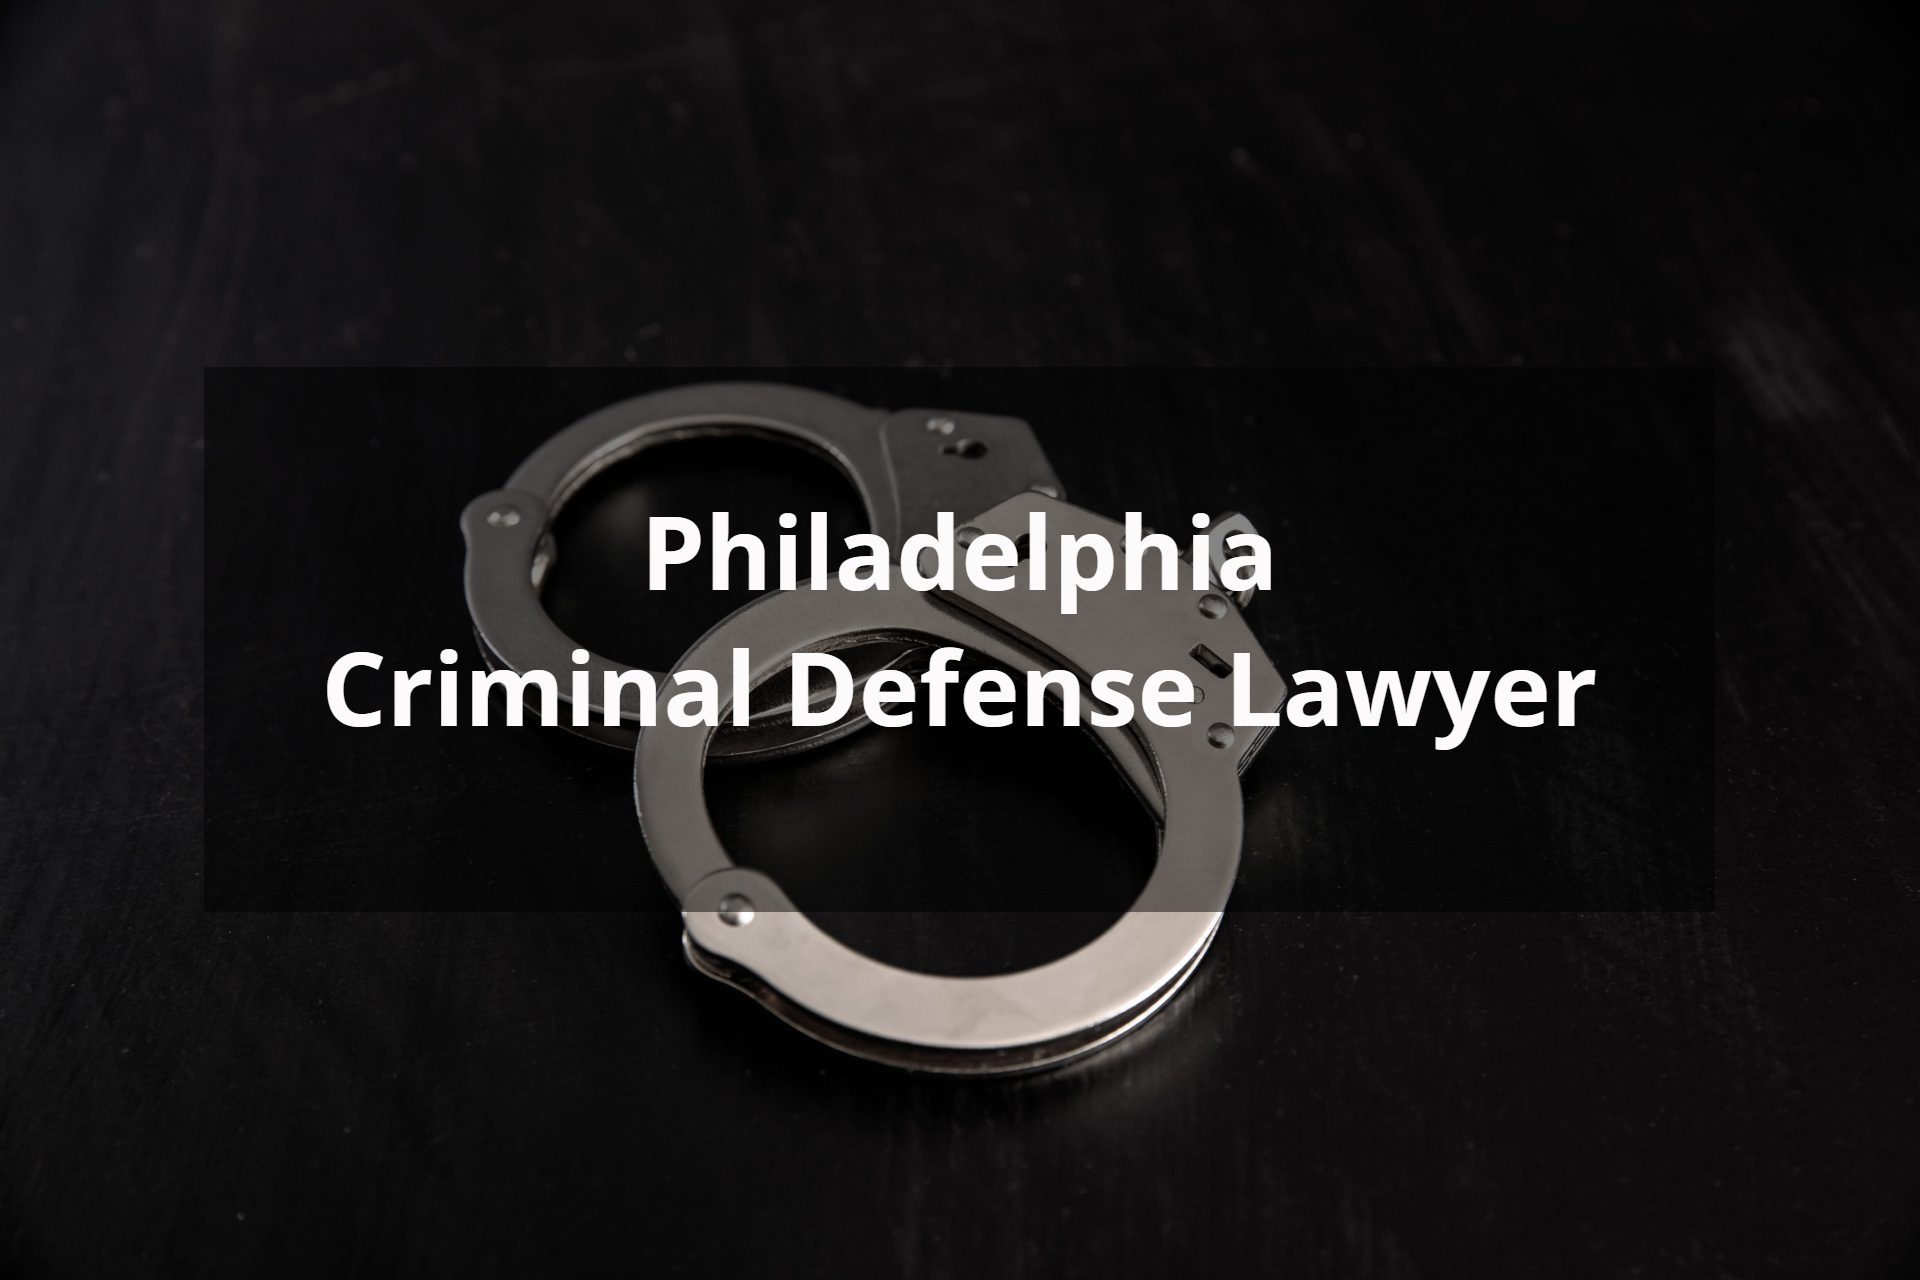 Philadelphia Criminal Defense Lawyer